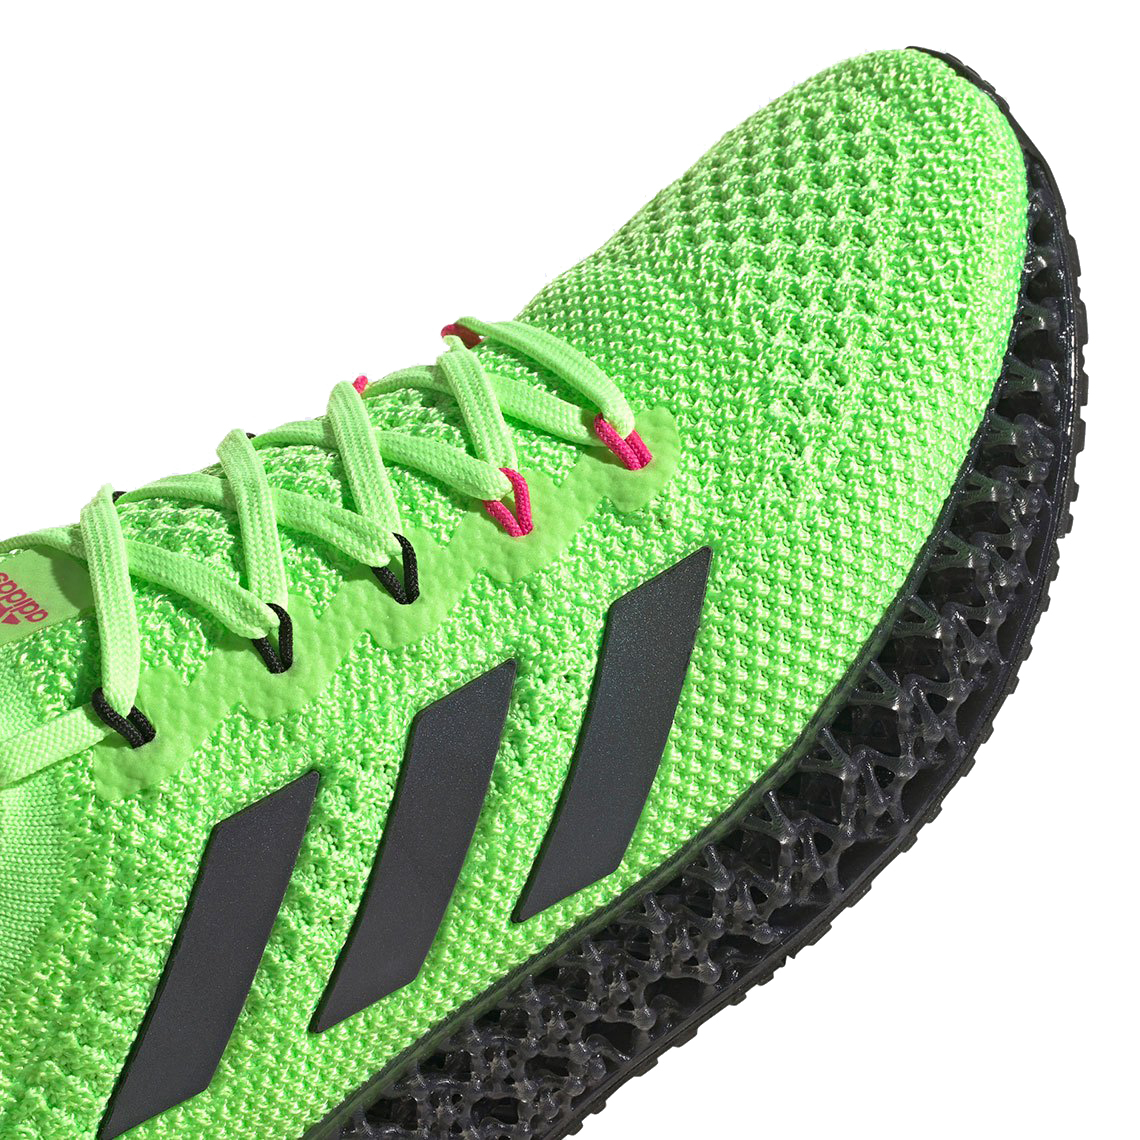 adidas 4DFWD Signal Green - Aug 2021 - Q46445